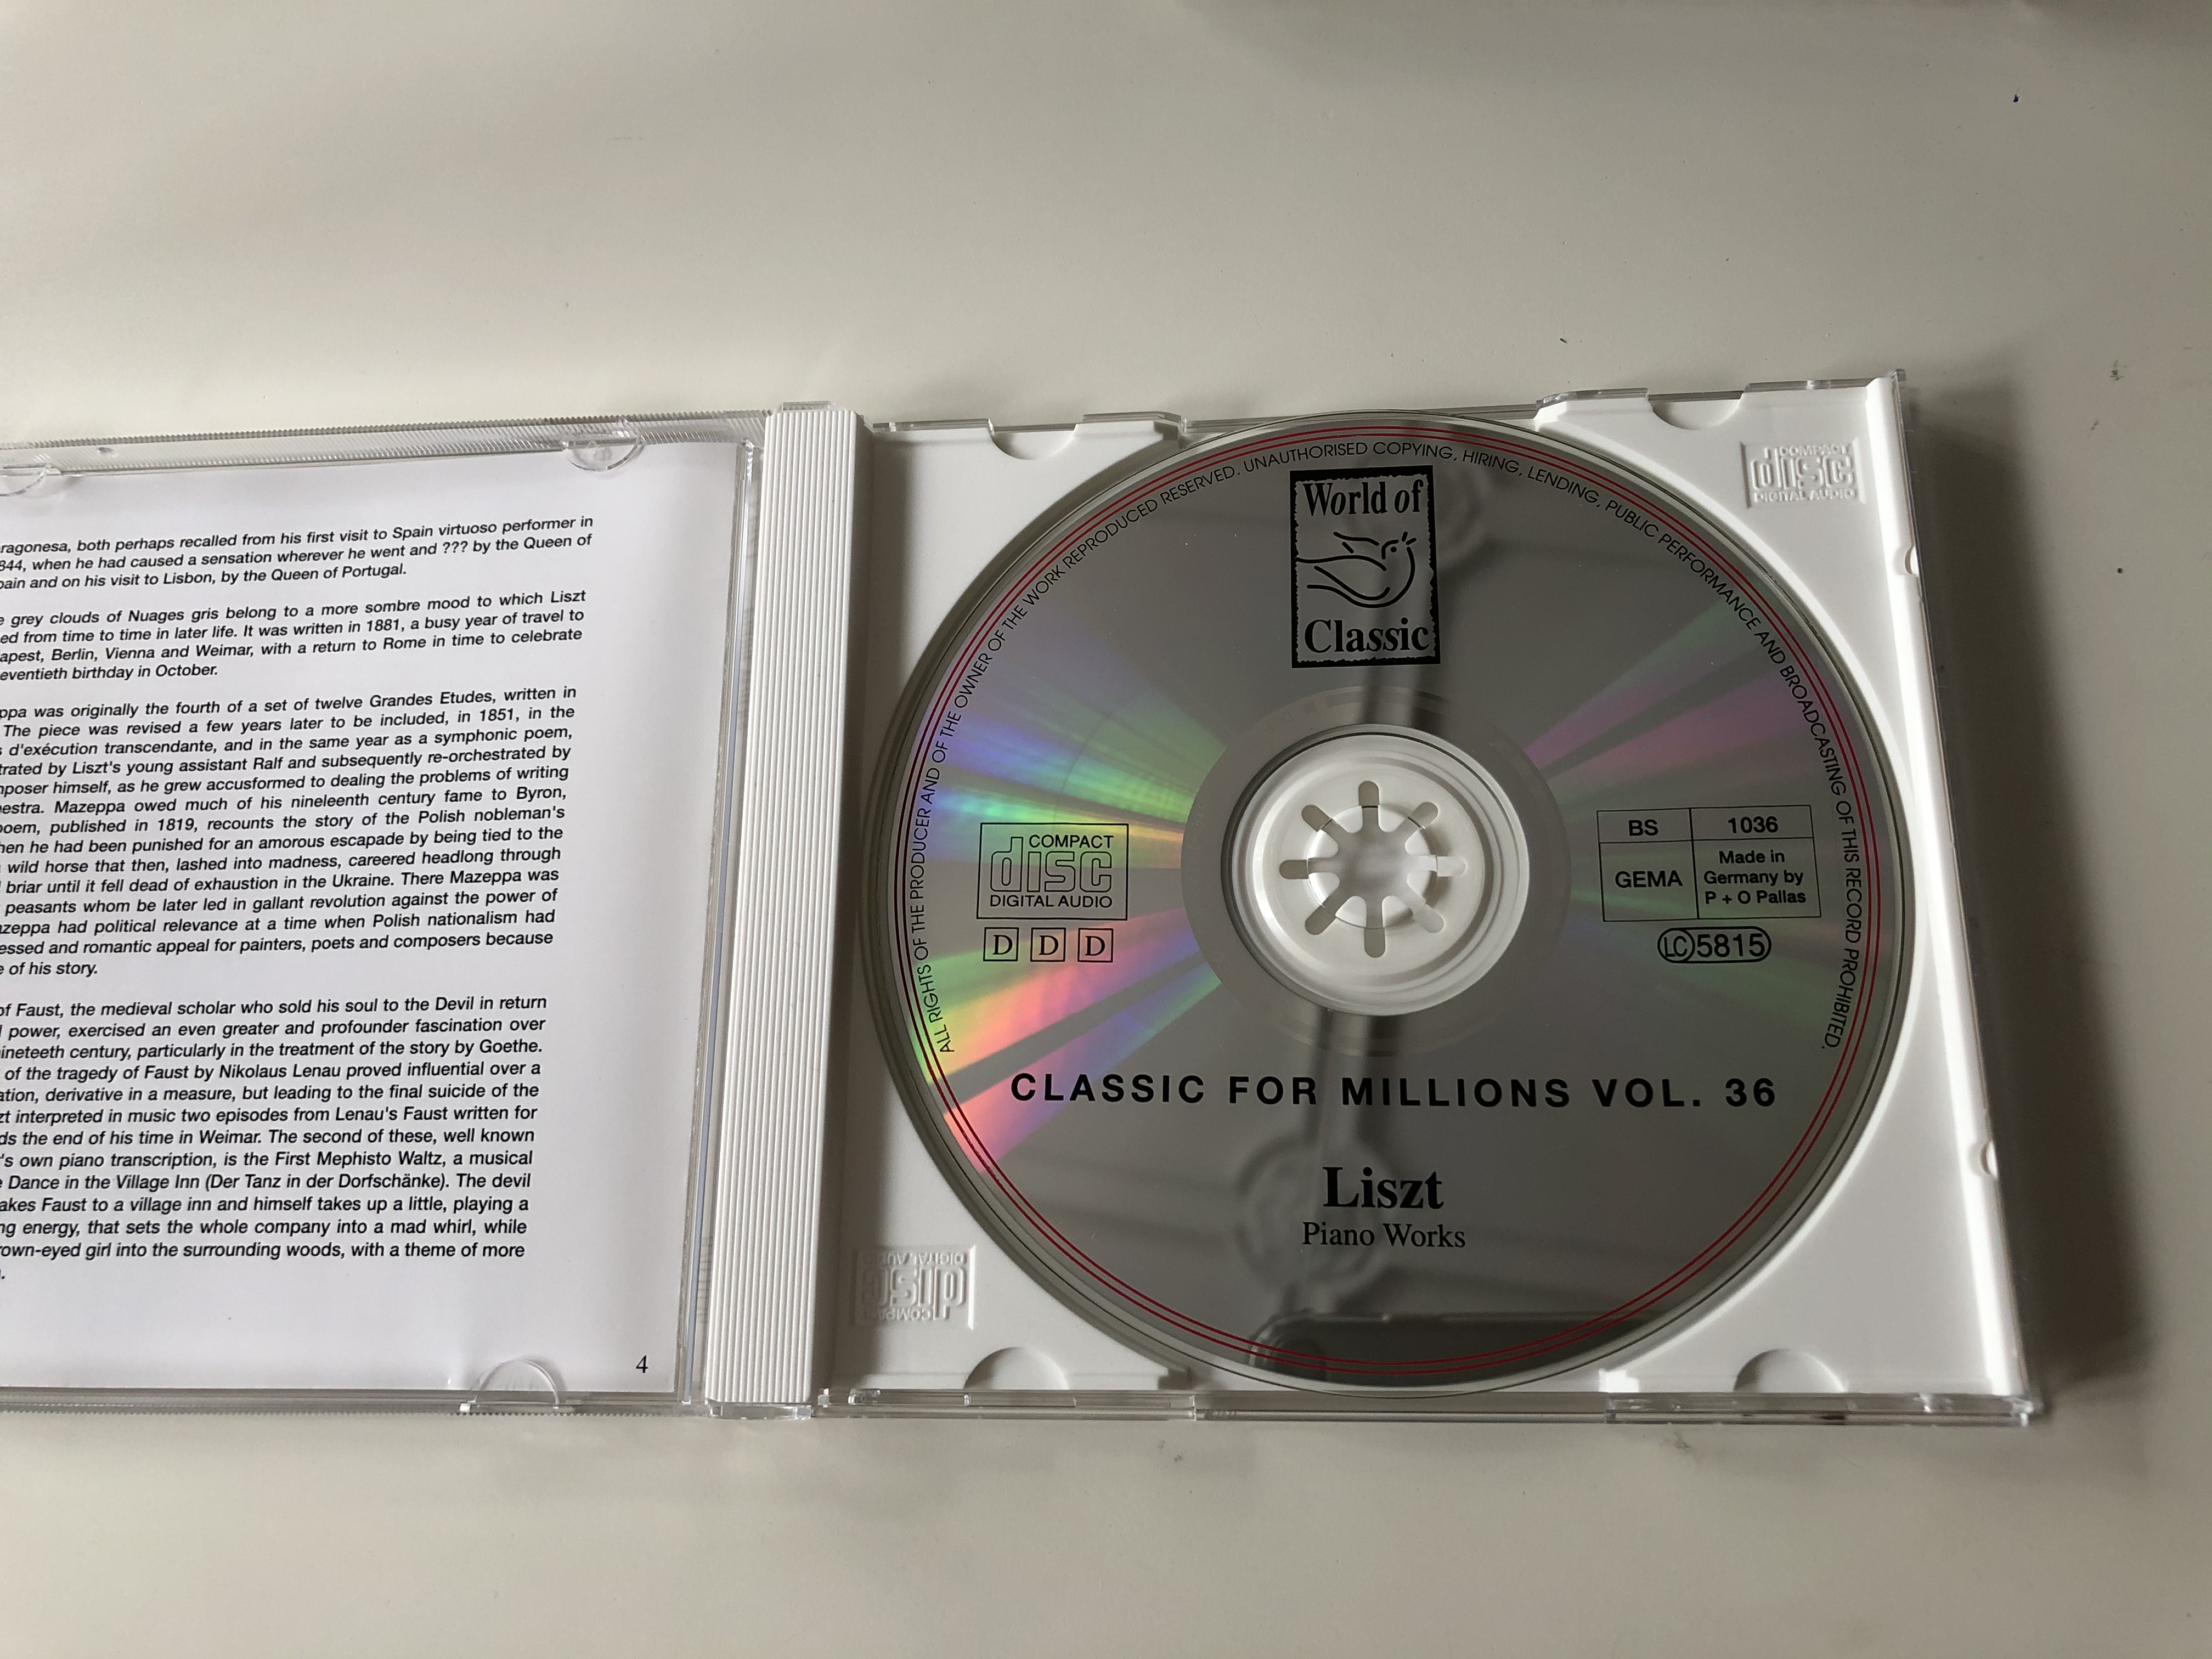 classic-for-millions-vol.-36-liszt-piano-works-world-of-classic-audio-cd-1993-870-1036-4-.jpg